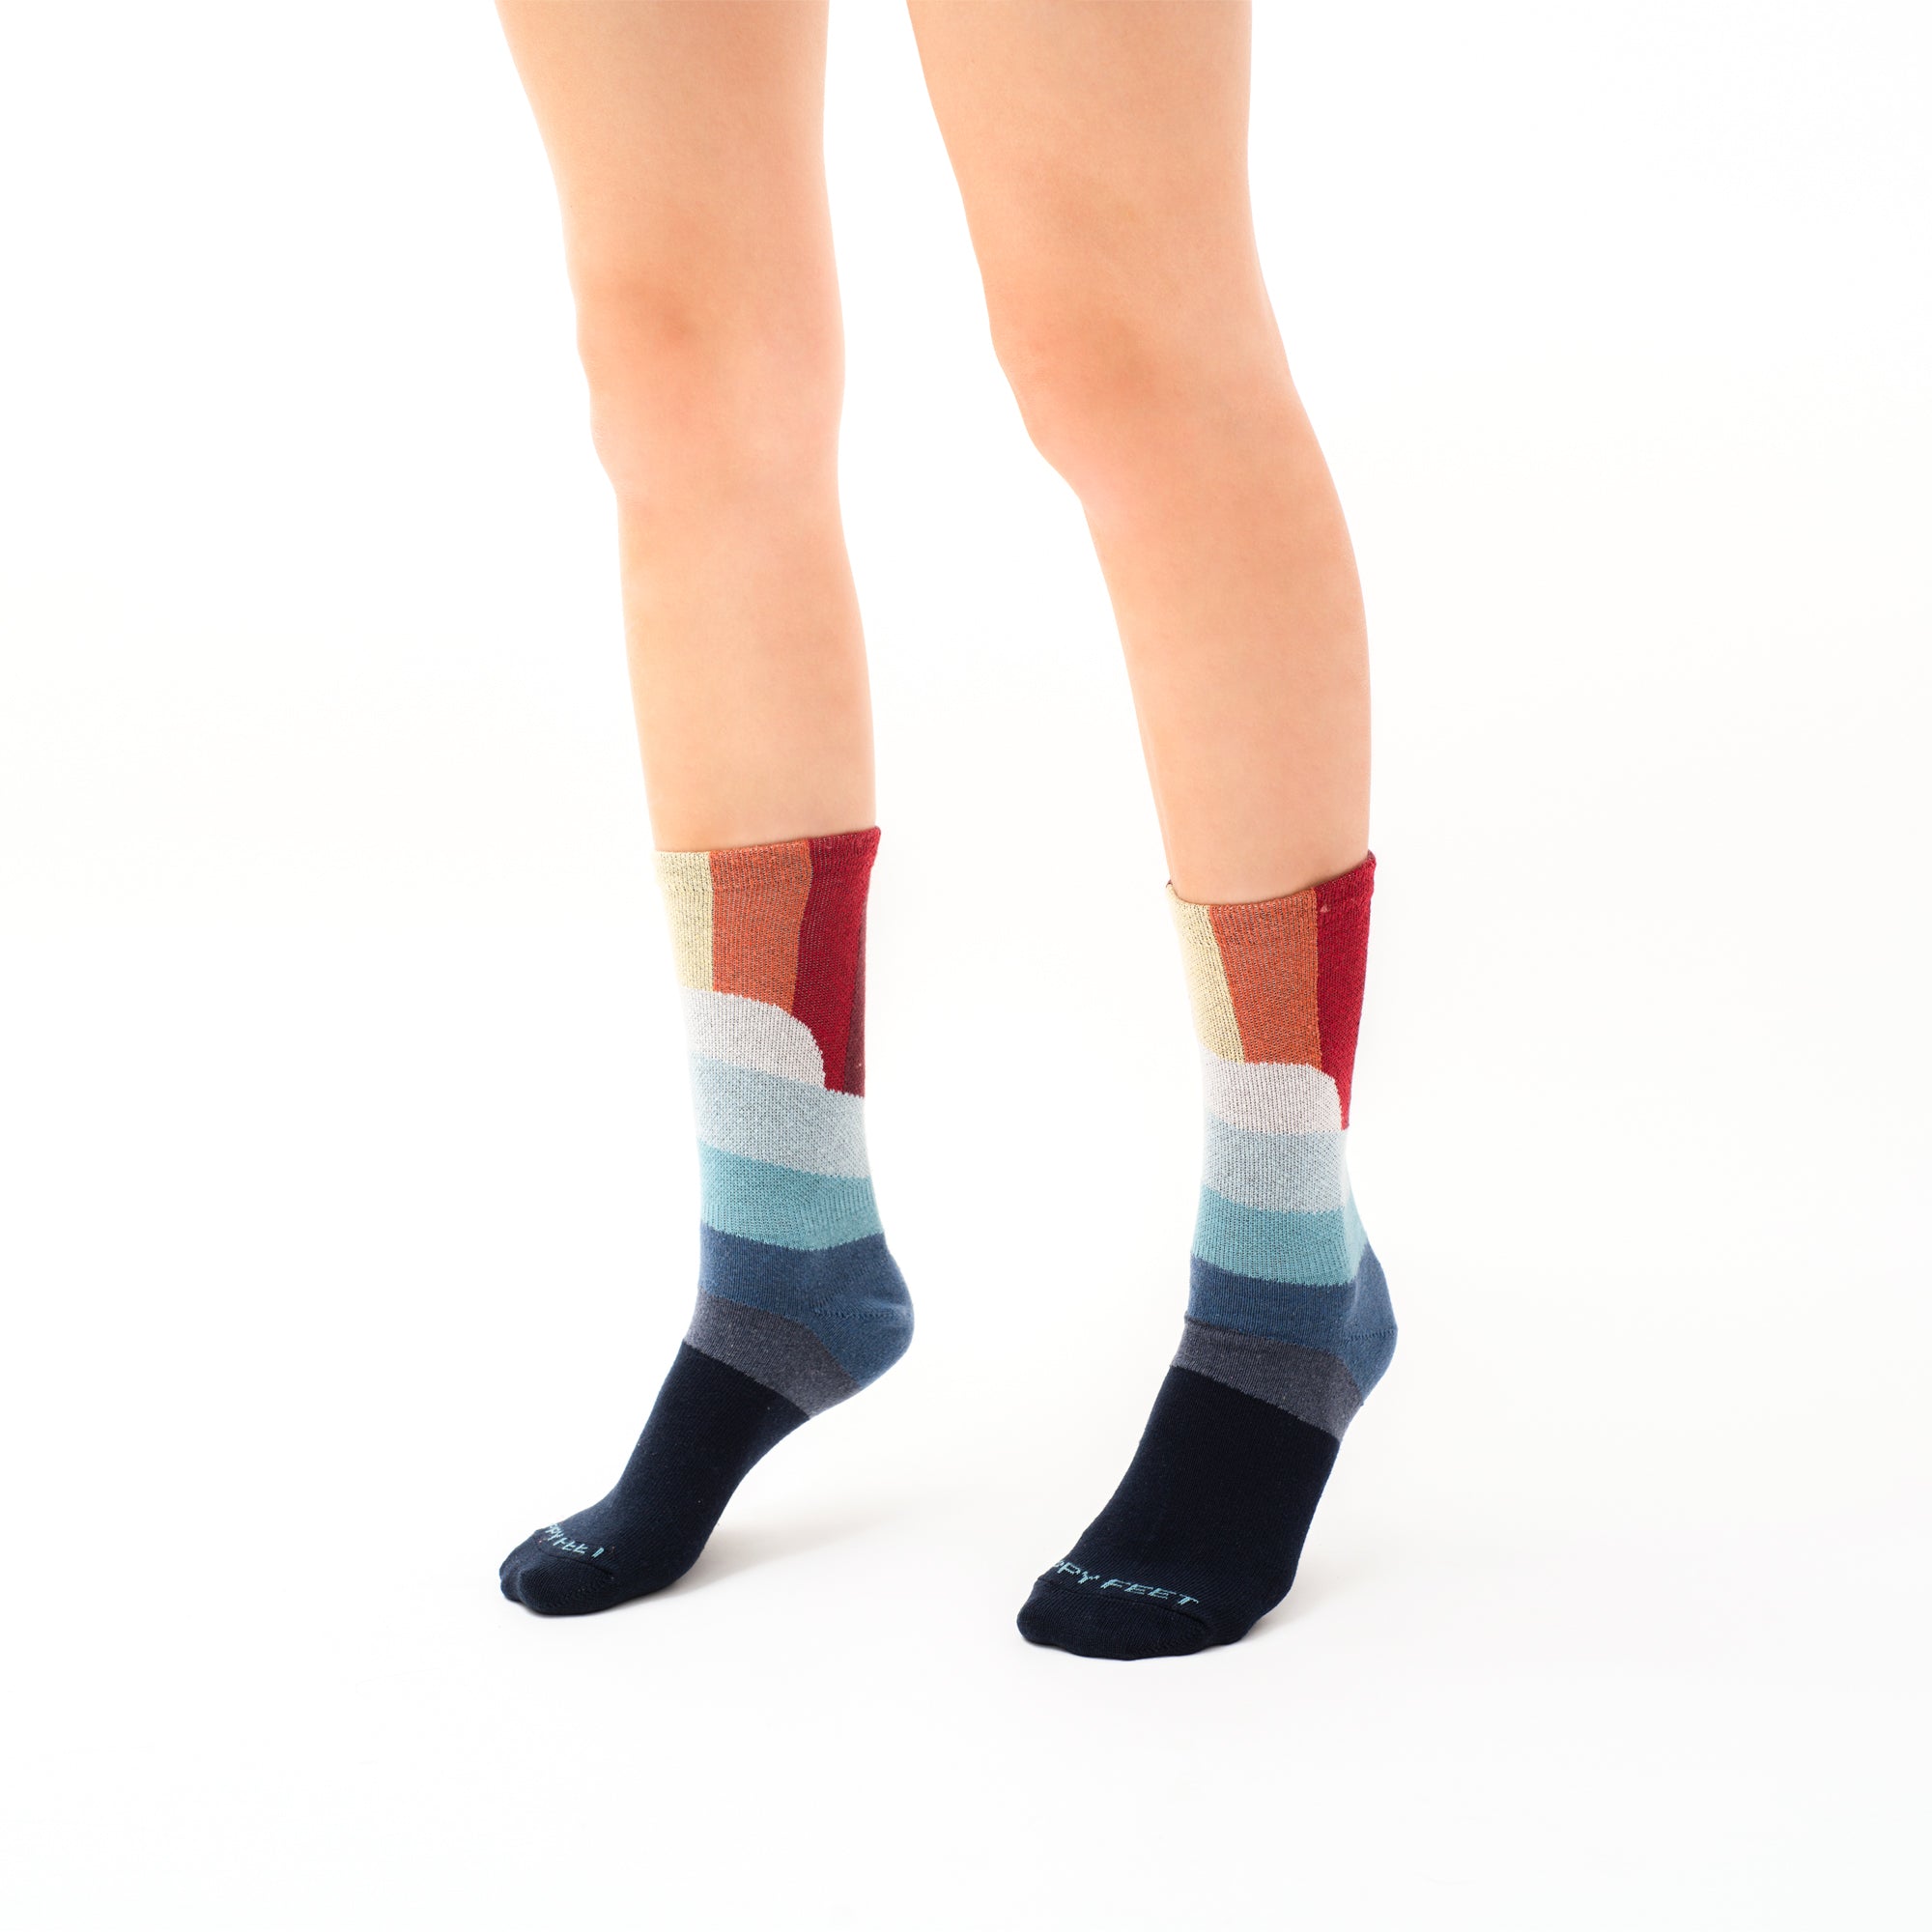 Sunset motif socks